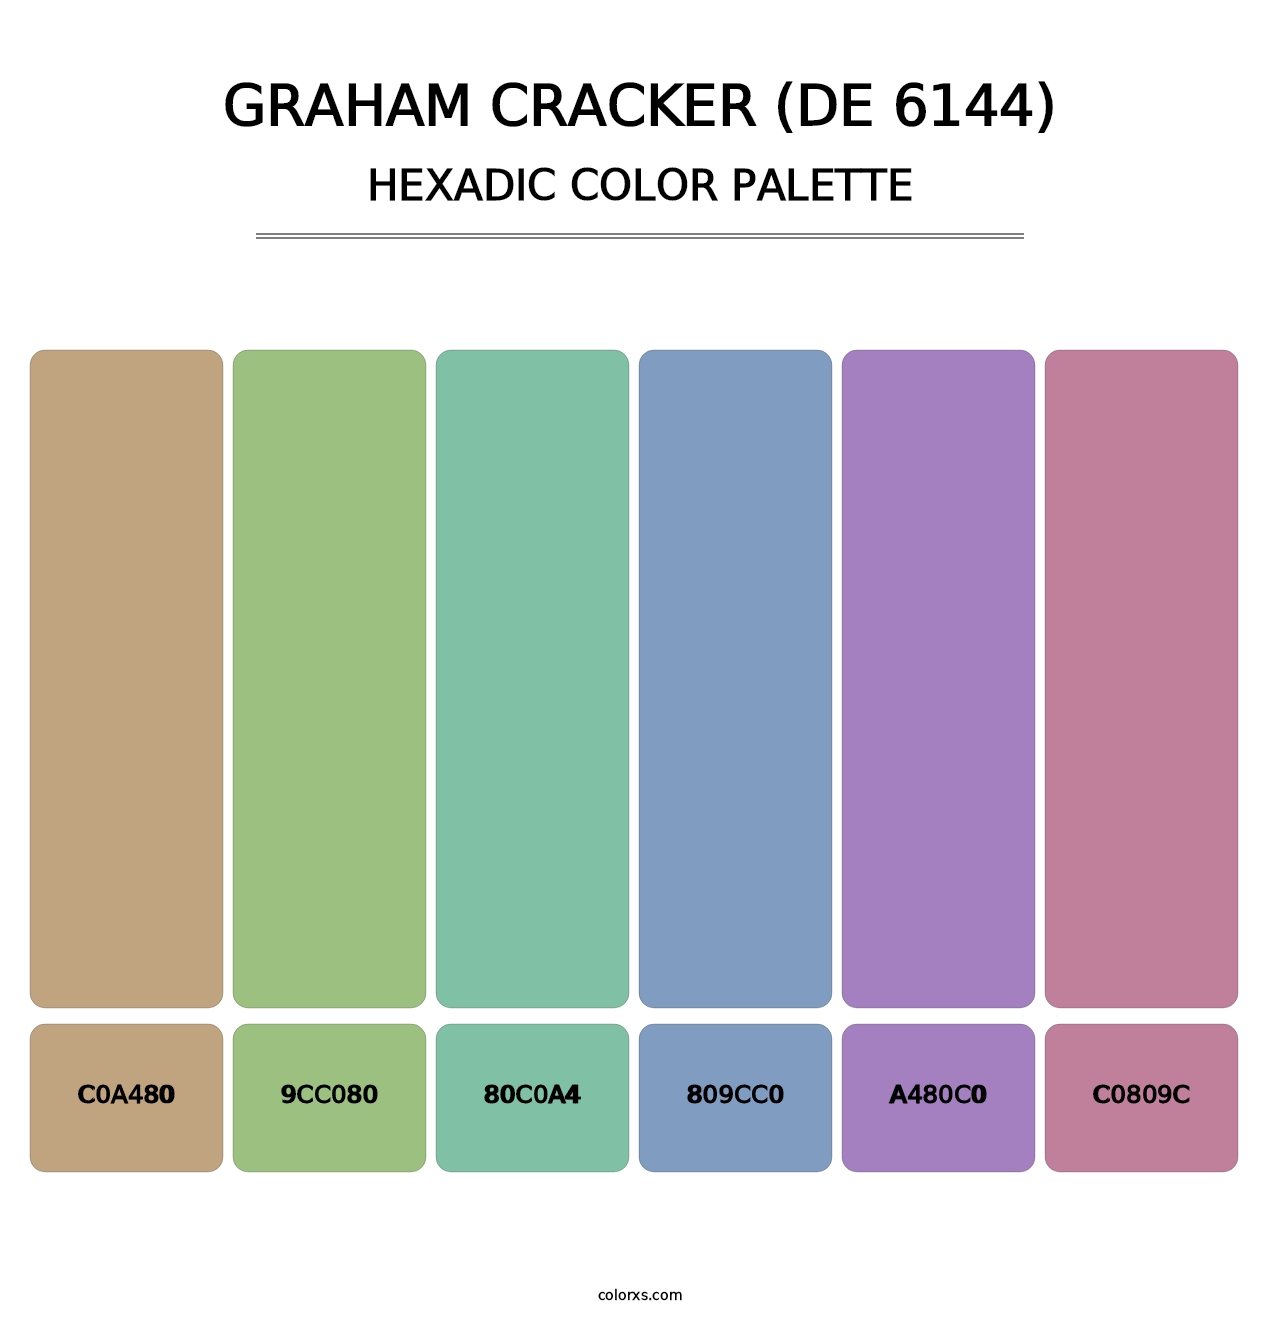 Graham Cracker (DE 6144) - Hexadic Color Palette